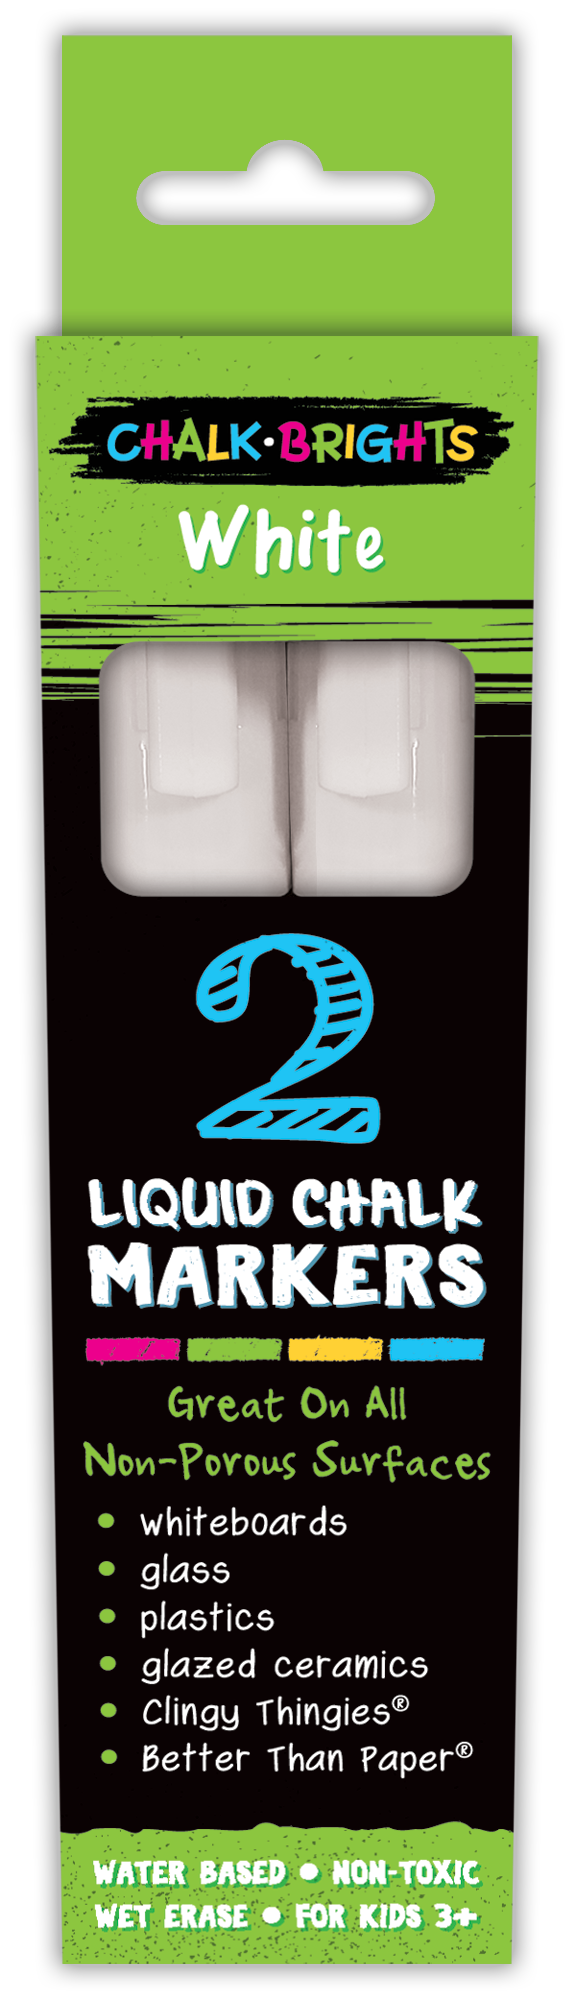 Chalk Brights White Liquid Chalk Markers (2 per pack)